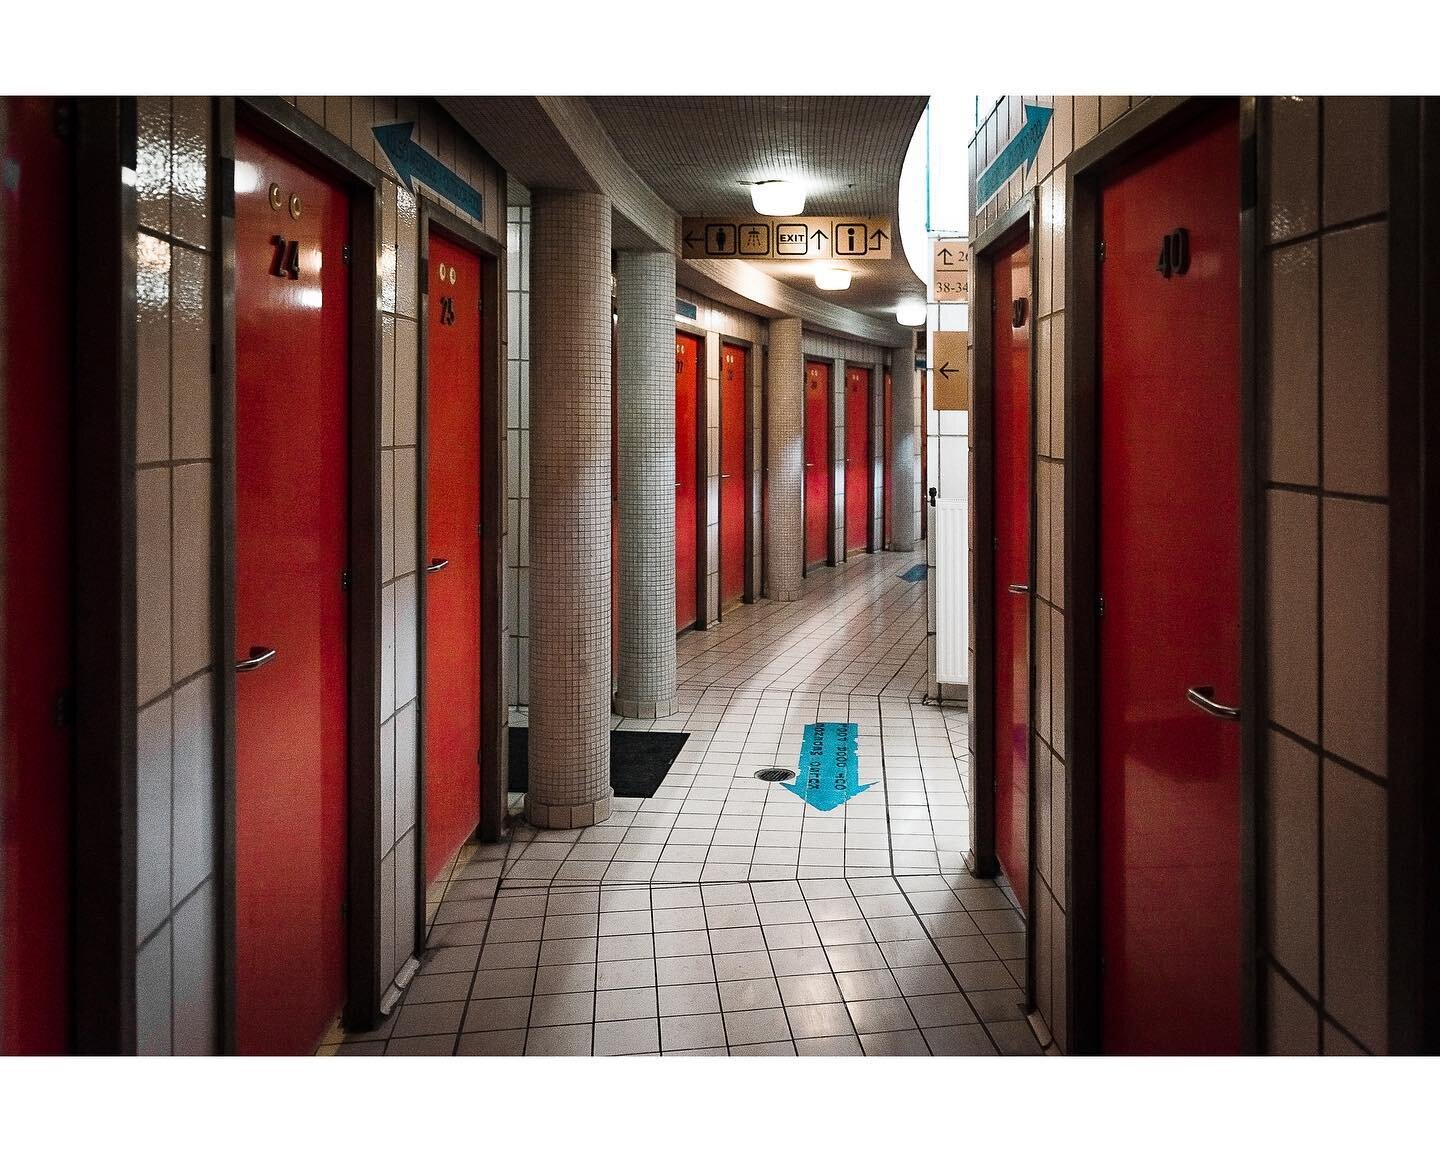 Red Door Corridor - Budapest, Hungary - 2017 

#nilevinczphotography #nikonnofilter #yourshotphotographer #streetphotography #travelphotography #sweetstreetbeat #life_is_street #peopleinplaces #urbanlandscapes #photocinematica #eyeshotmag #madewithli